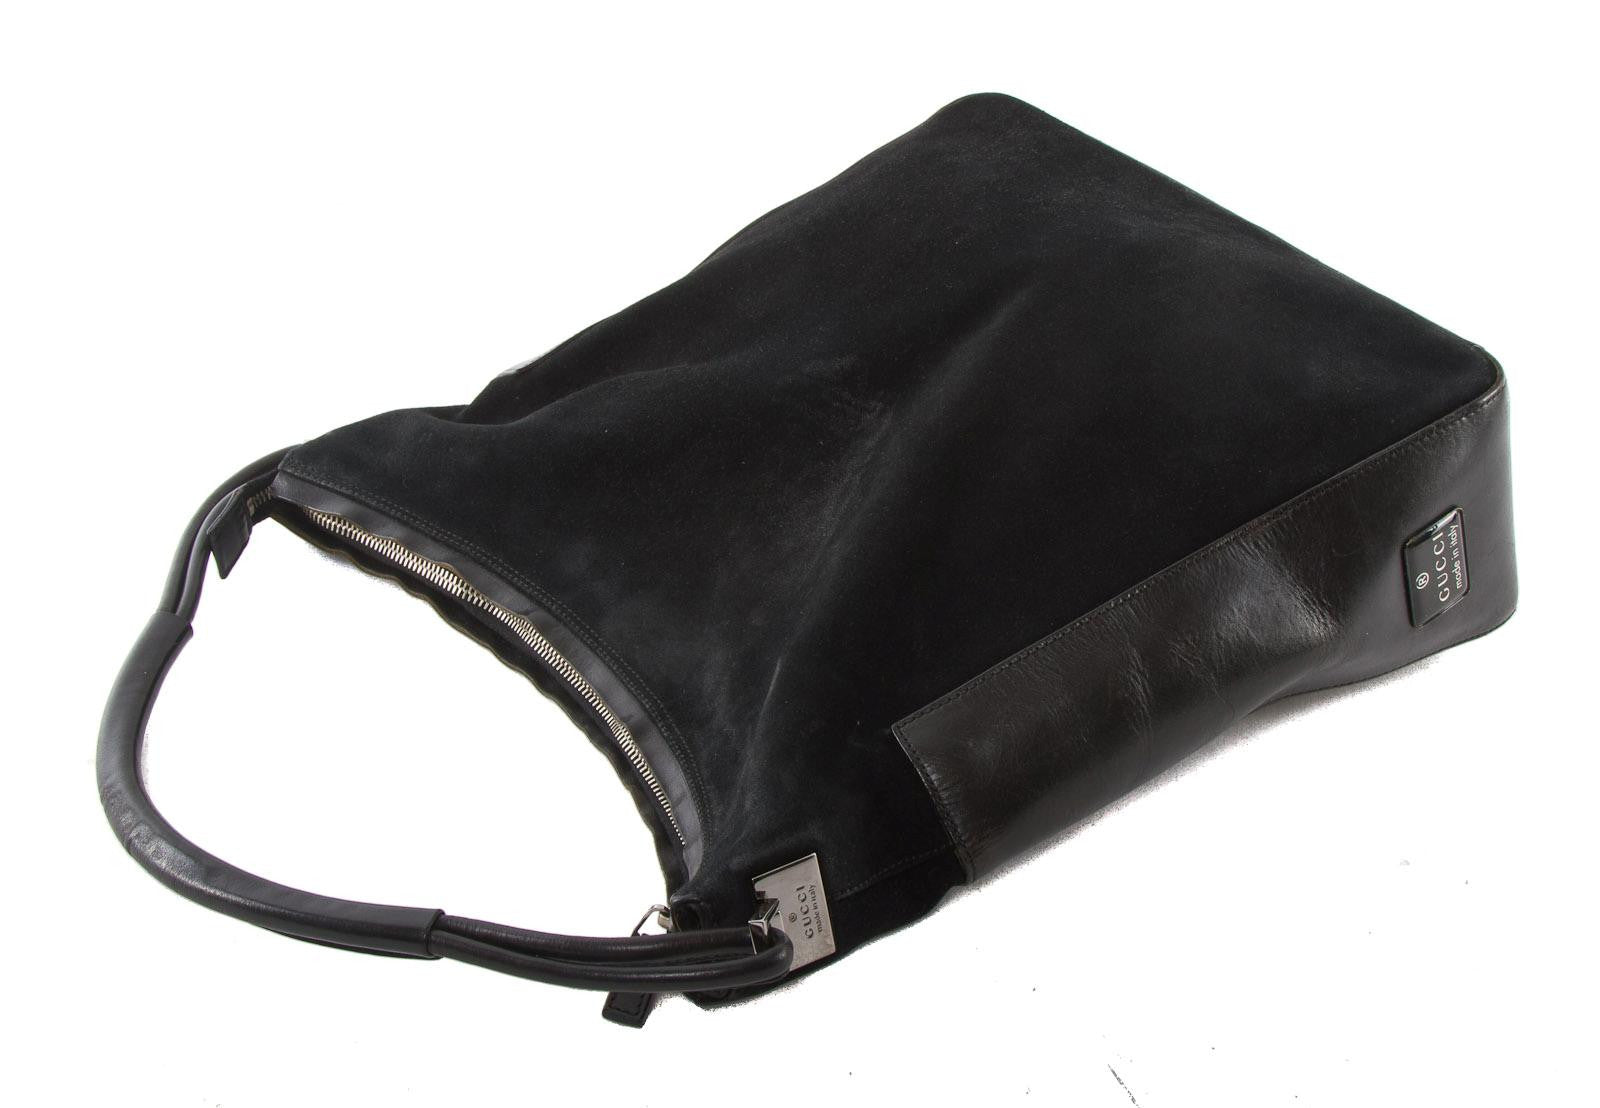 black suede gucci purse